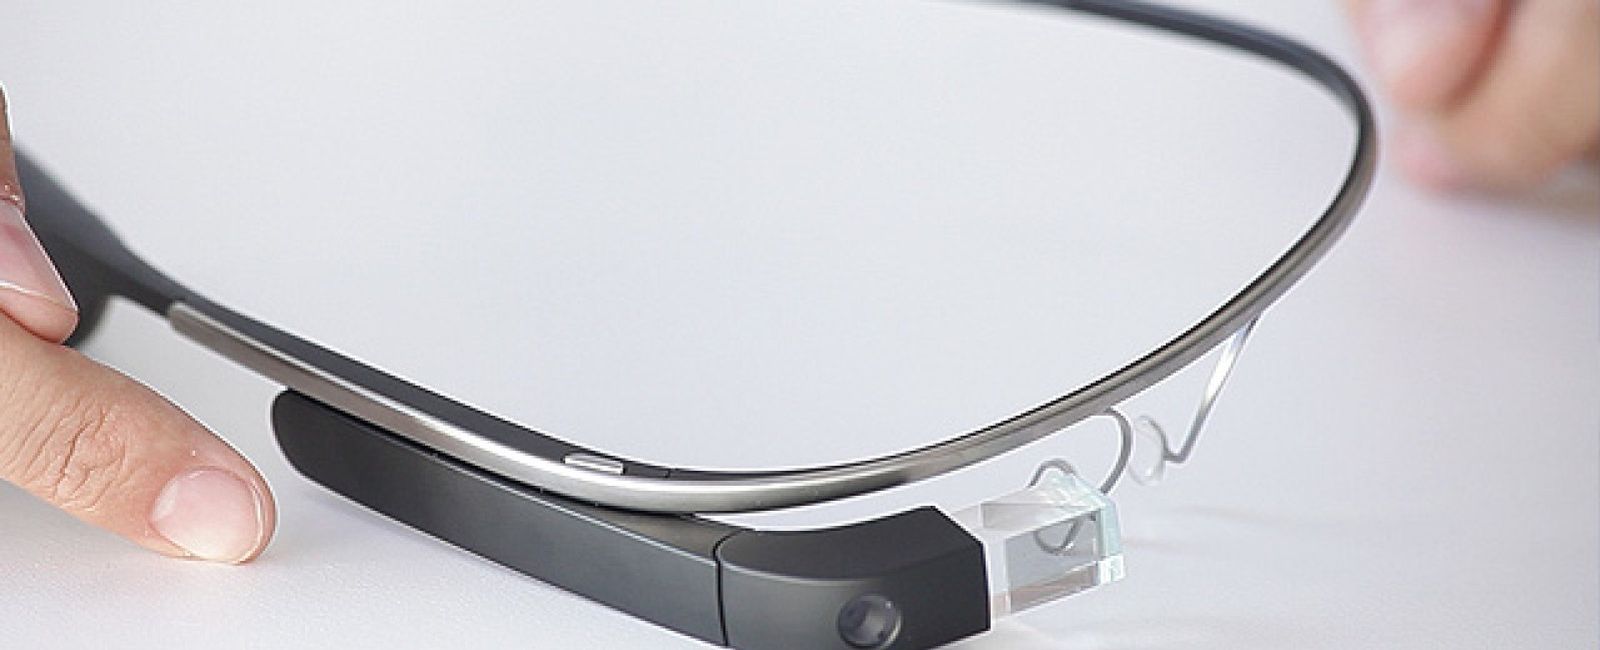 Foto: Probamos las Google Glass en Madrid